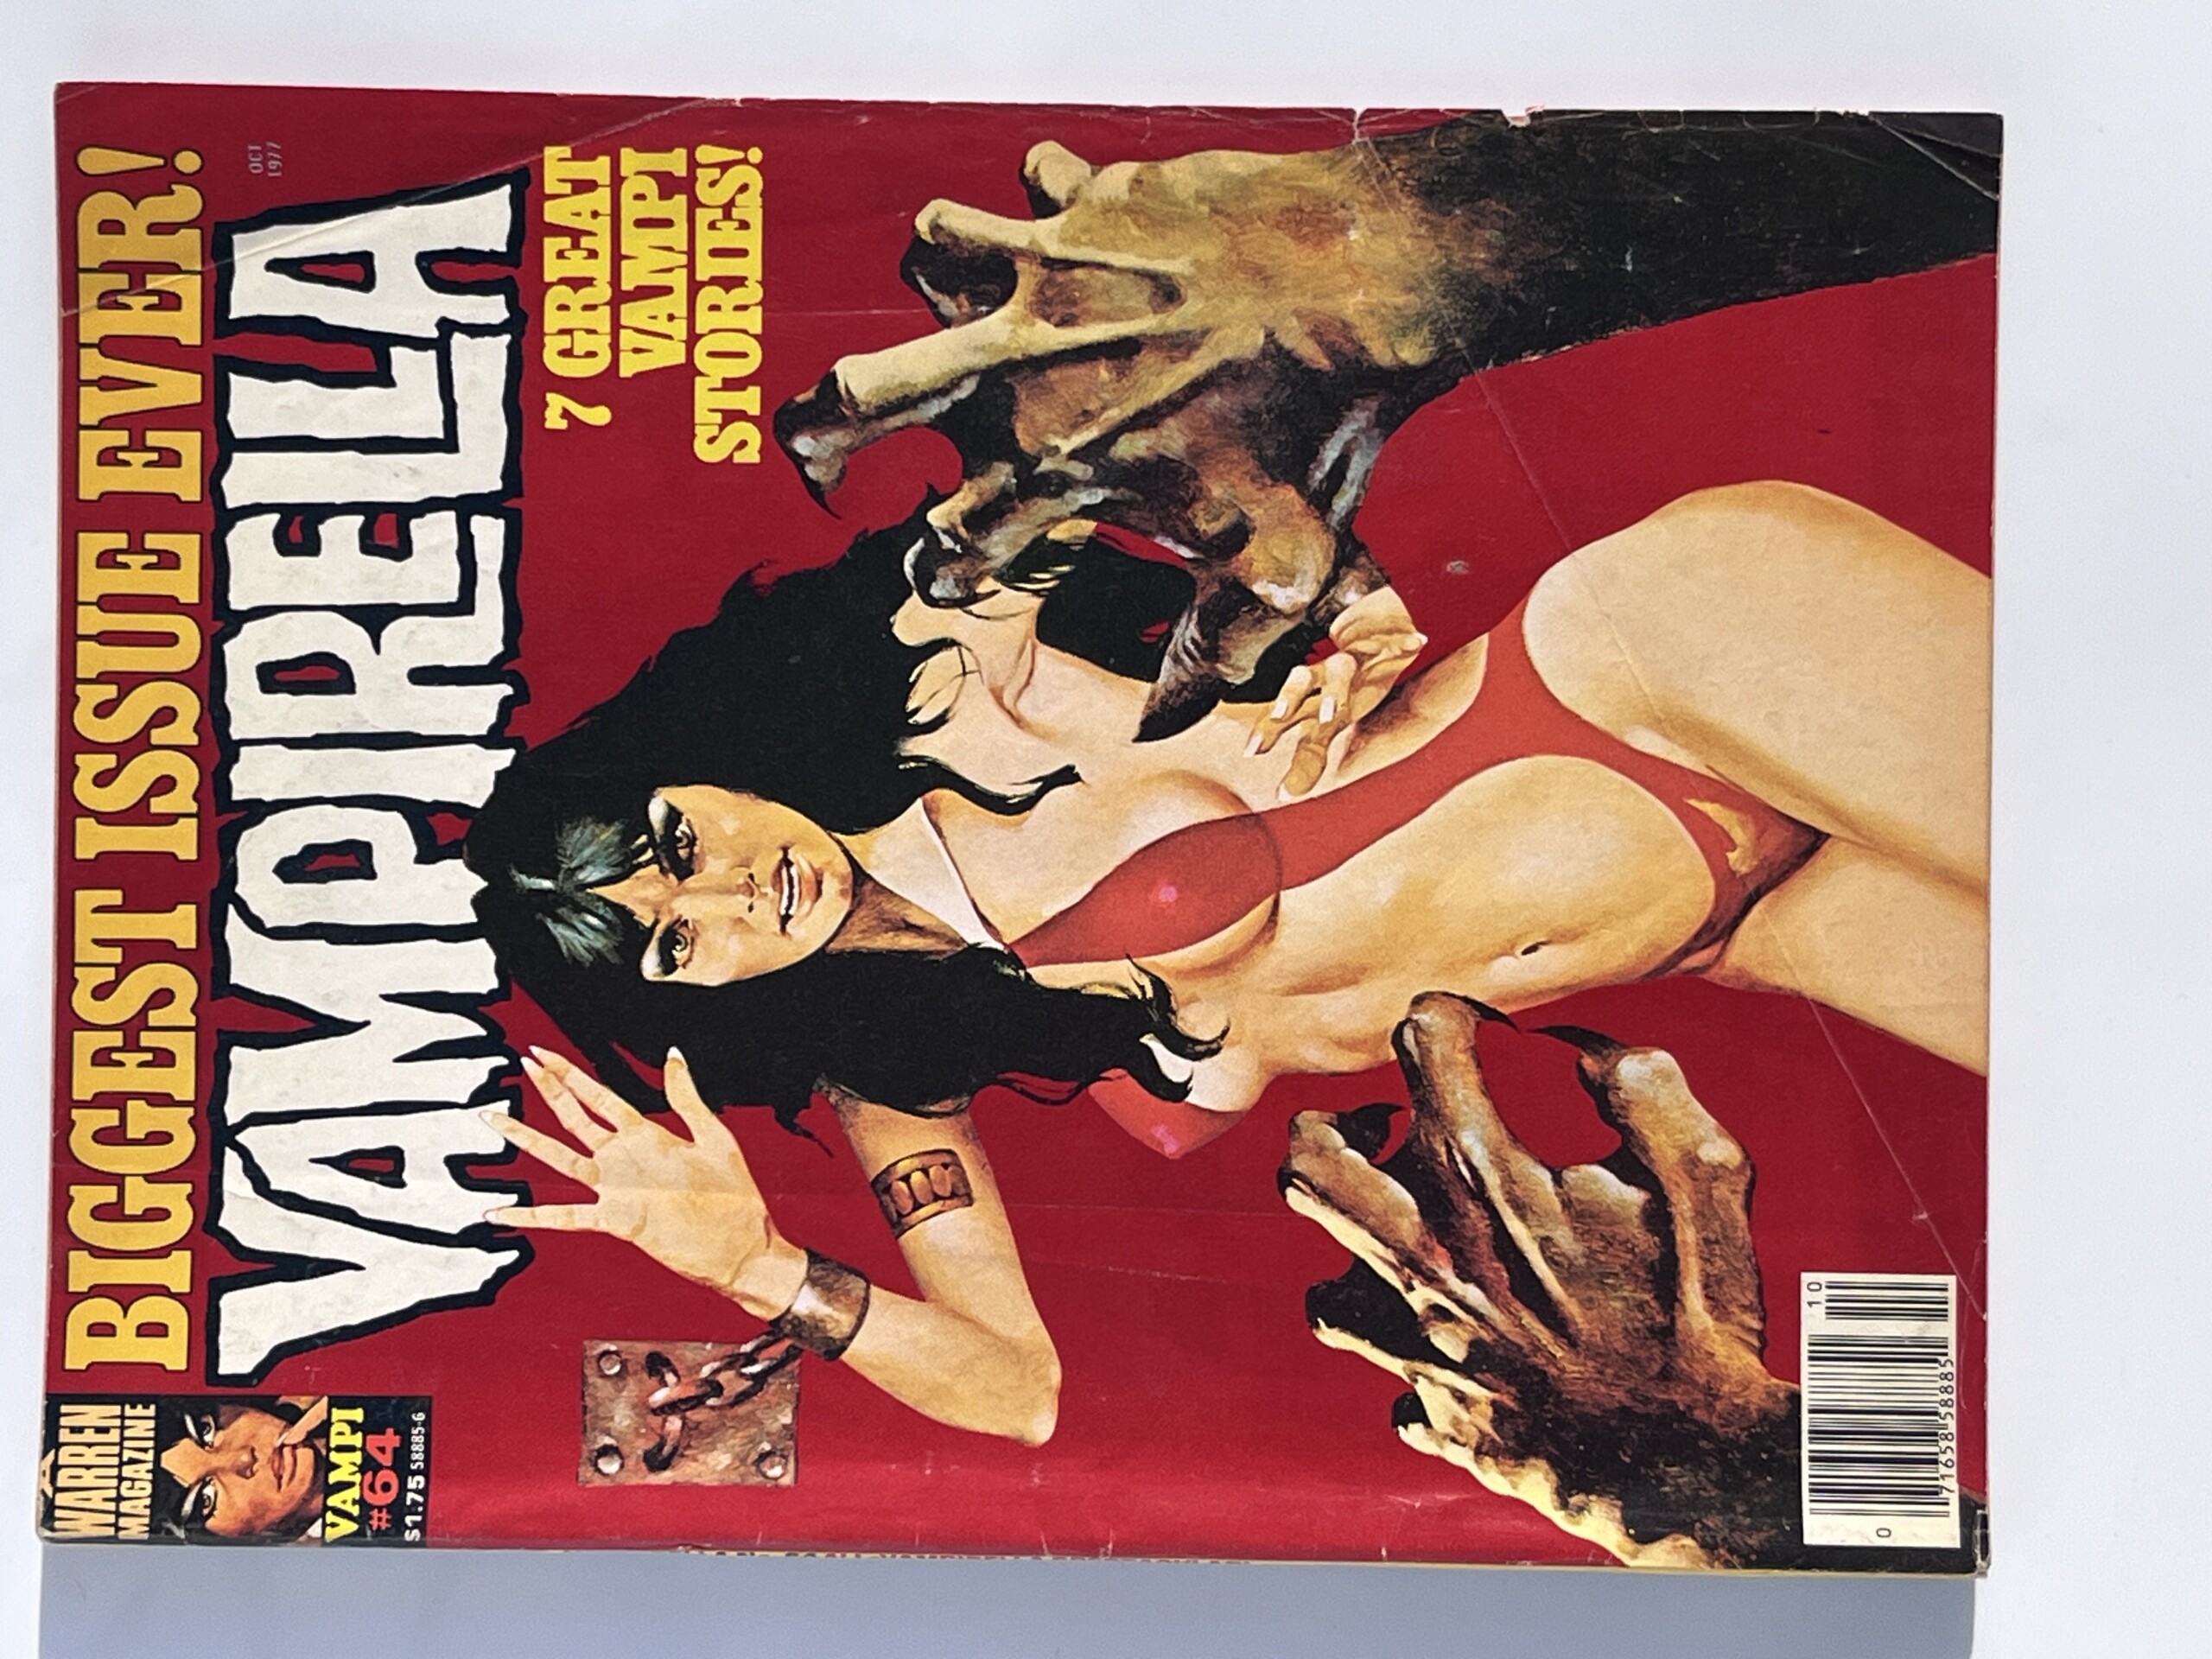 Vampirella #64 (1977) in Ungraded